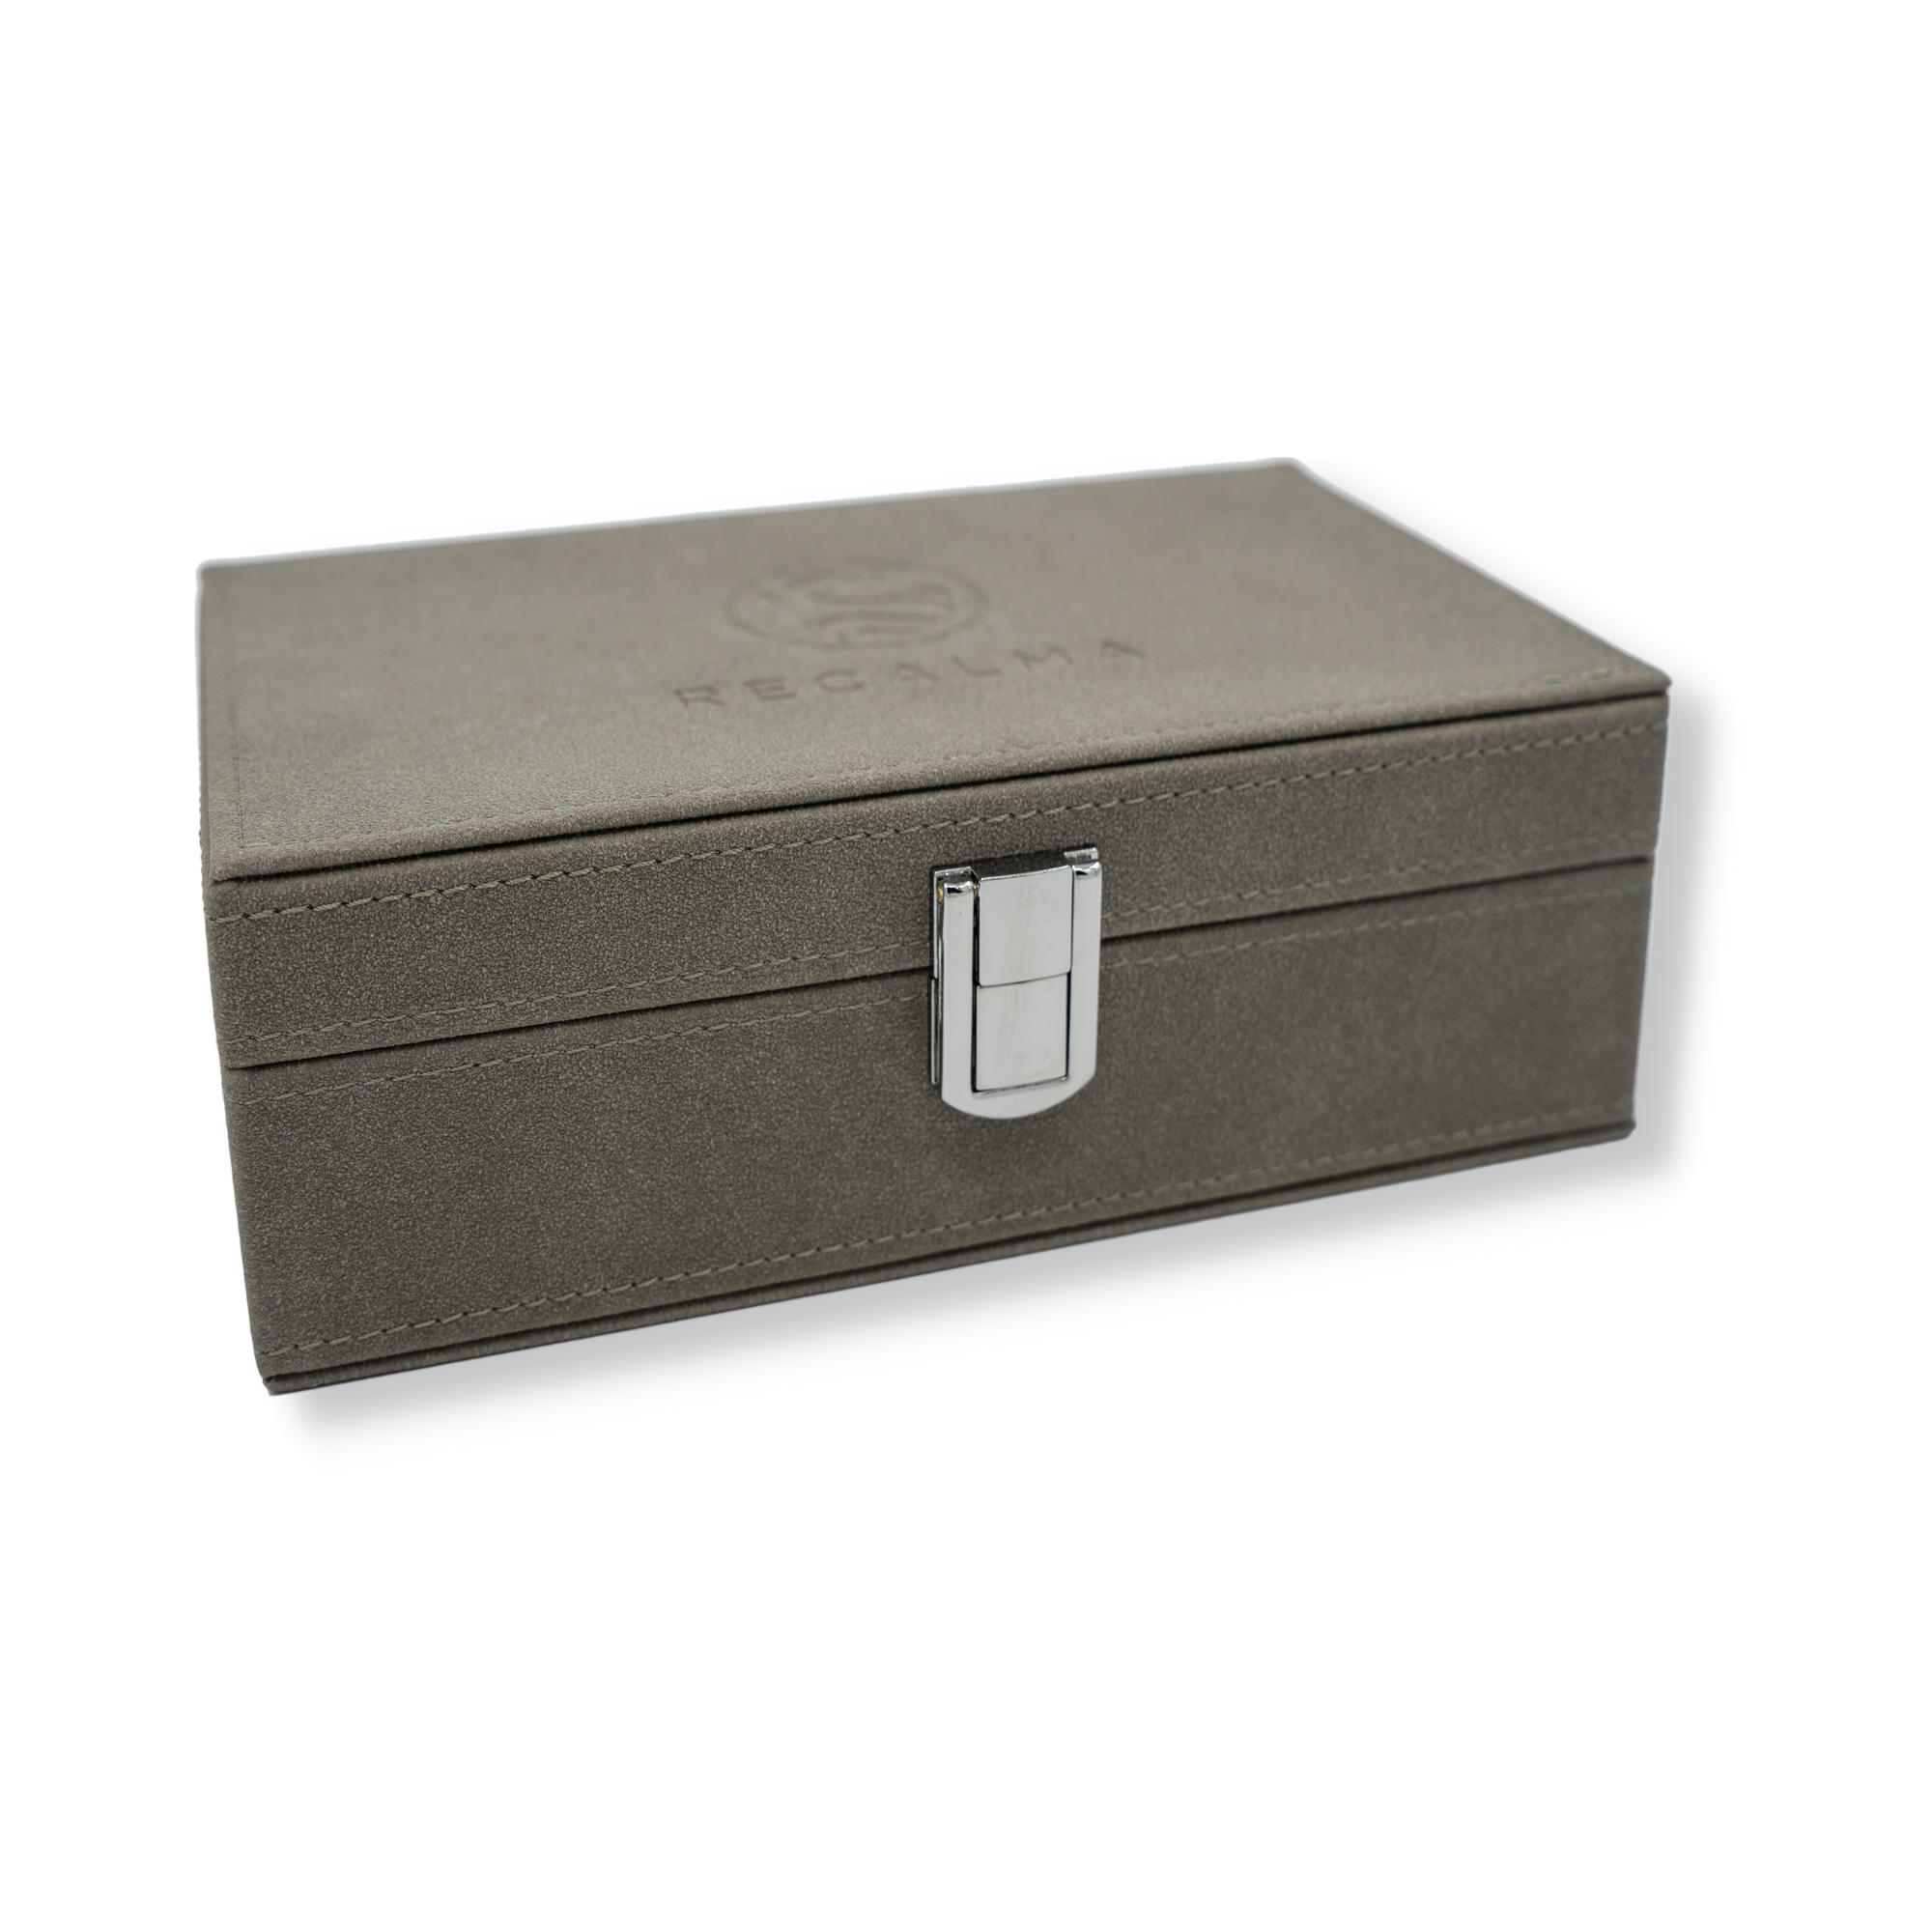 Neuf et occasion ⇒ Boite Sur Cle Faraday Box+Etui Keyless Gris